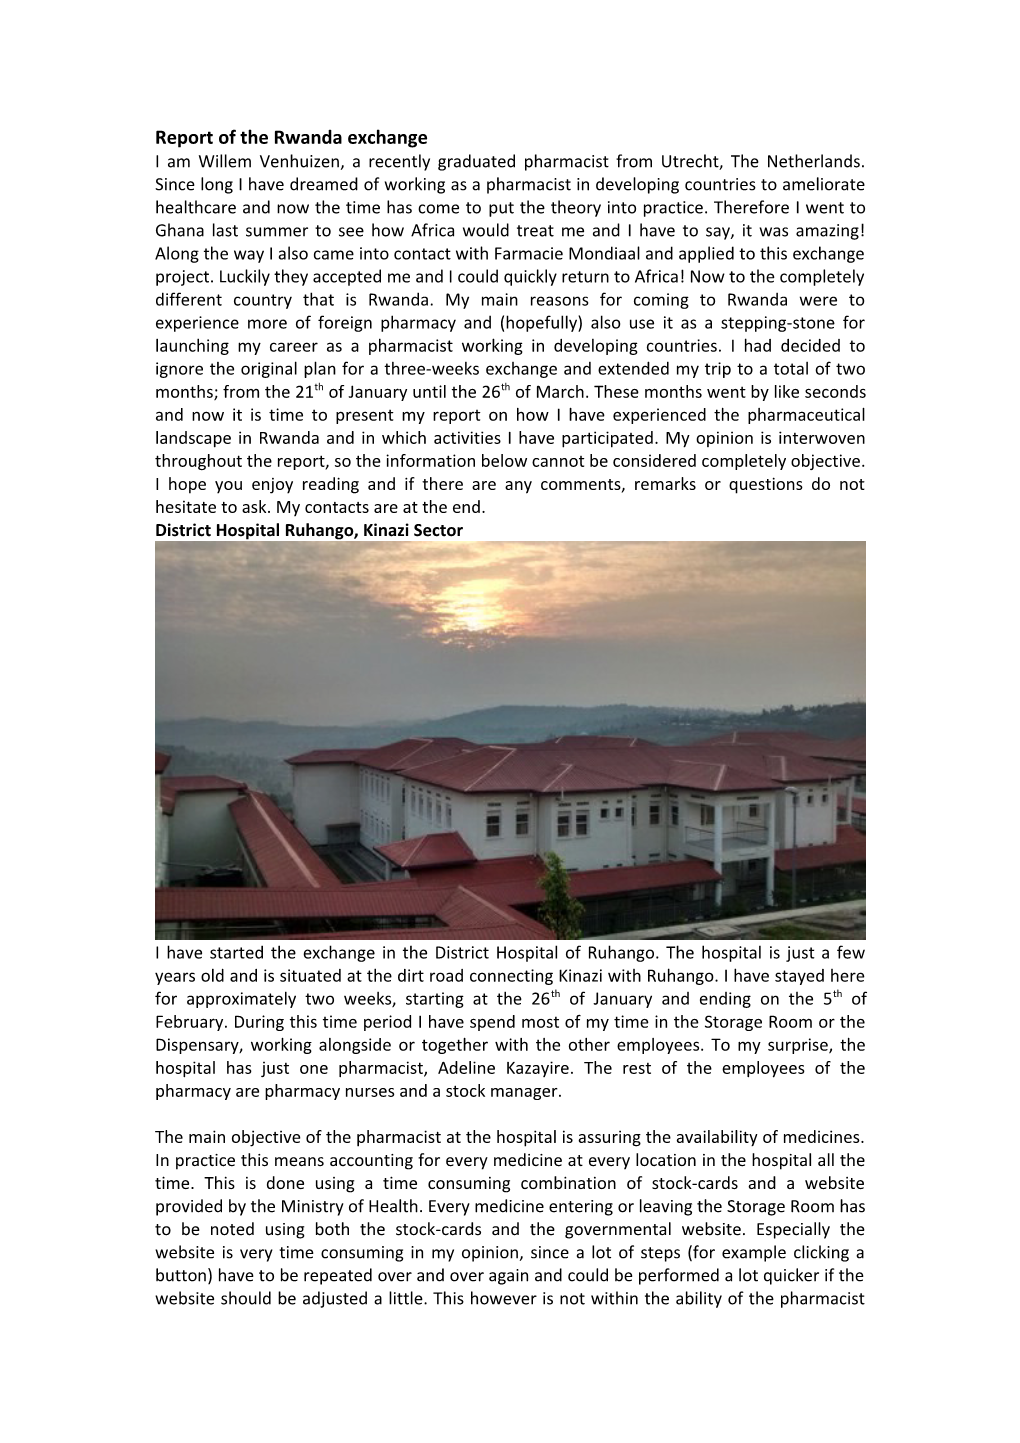 Report of the Rwanda Exchange